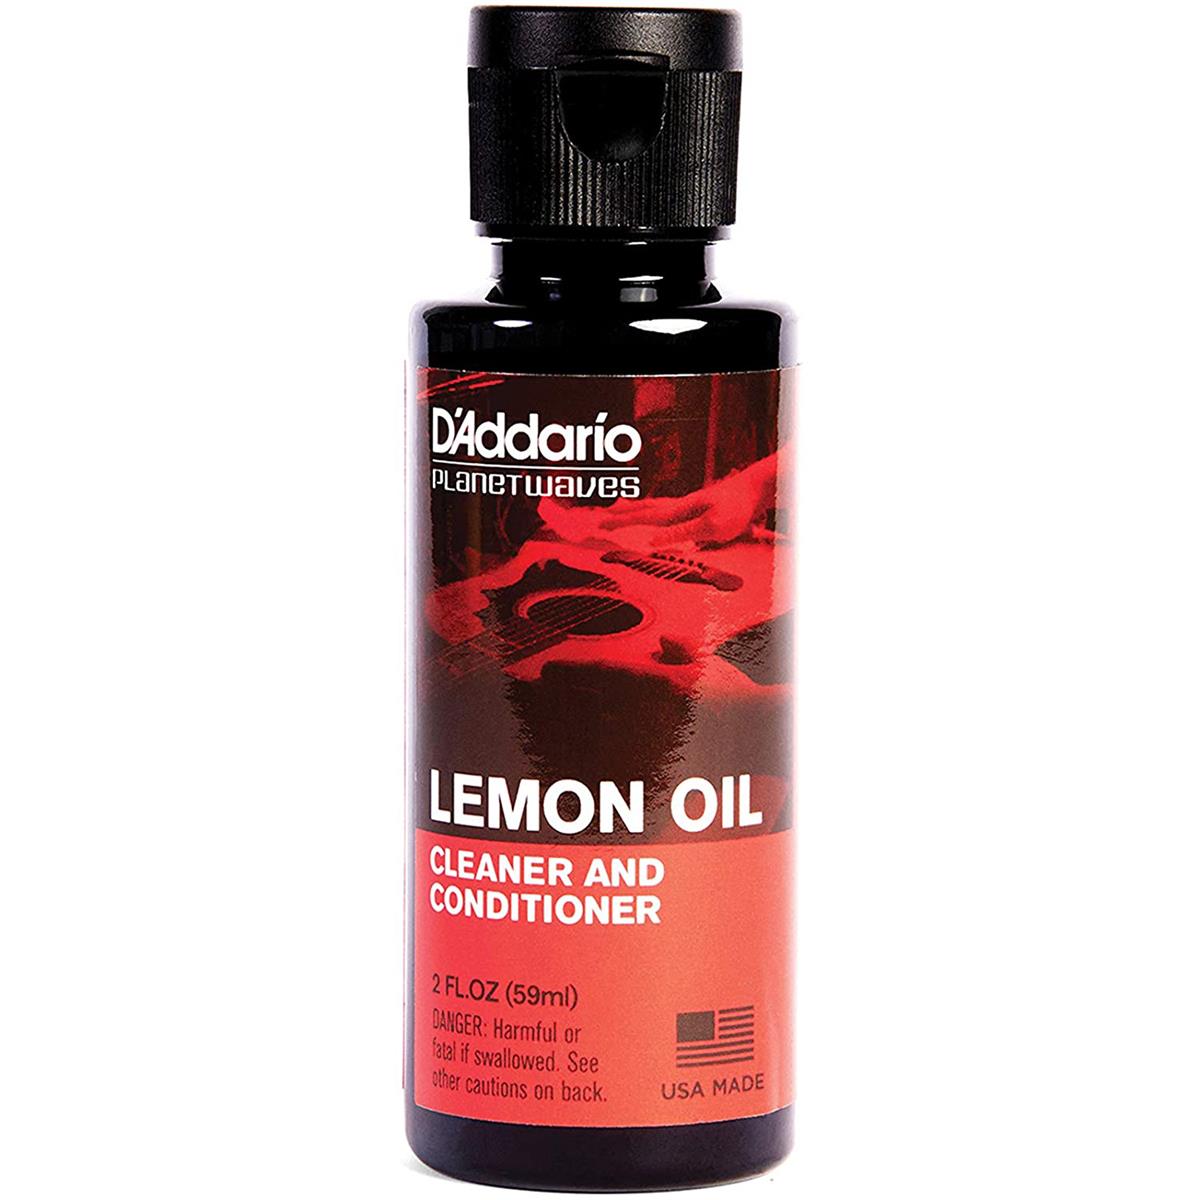 

D'Addario Lemon Oil Cleaner and Conditioner, 2 oz